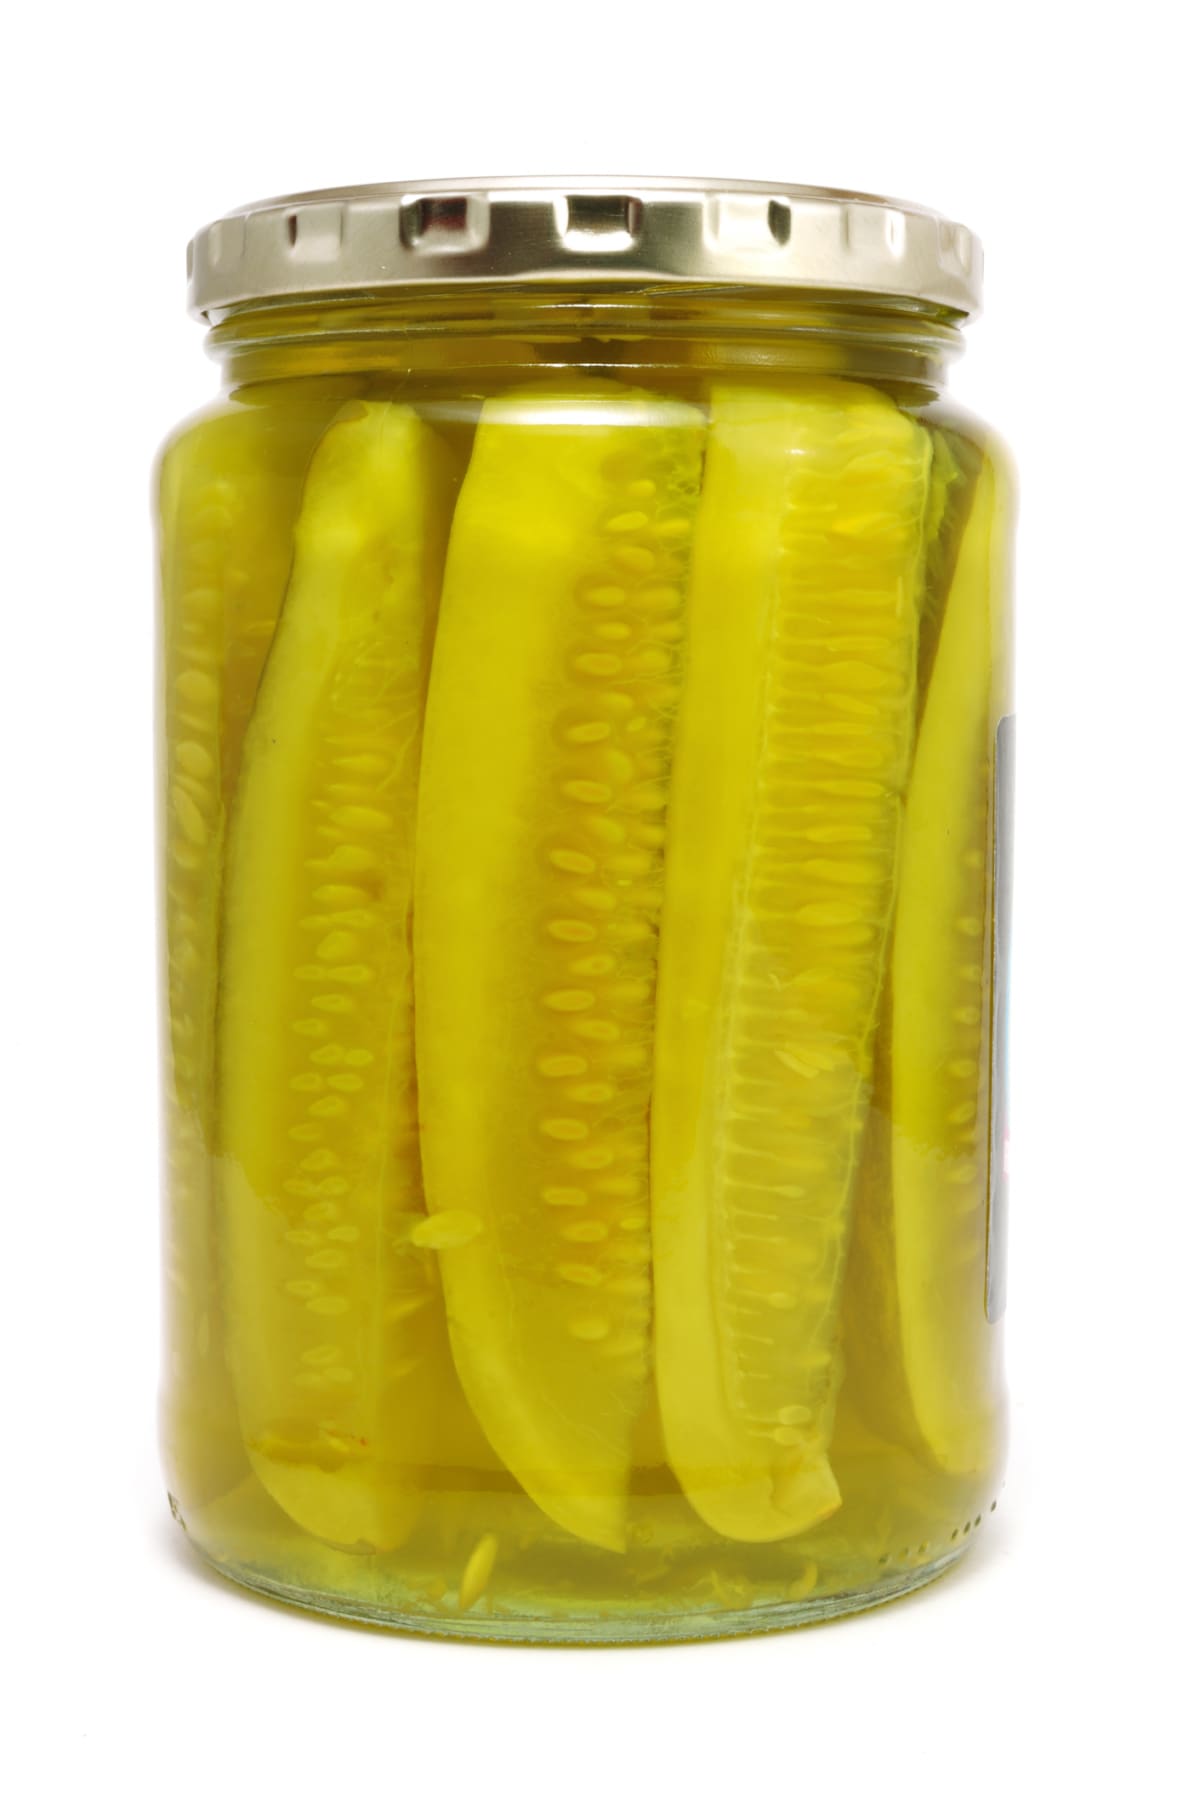 Pickle jar on white background